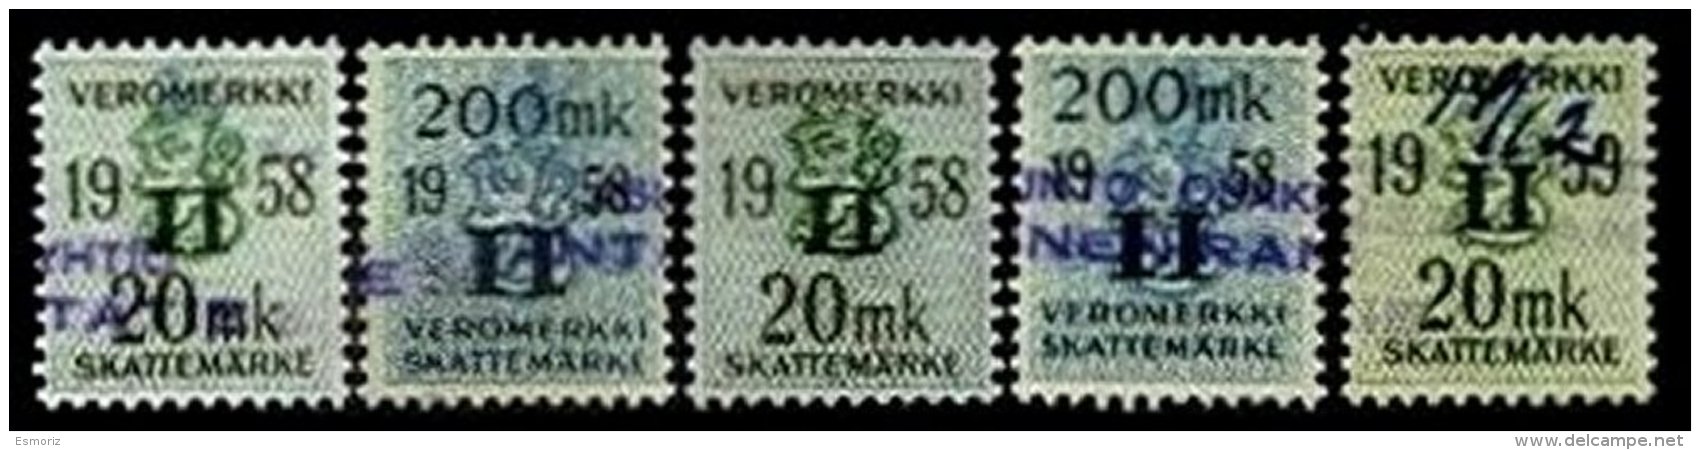 FINLAND, Income Tax, Used, F/VF - Revenue Stamps